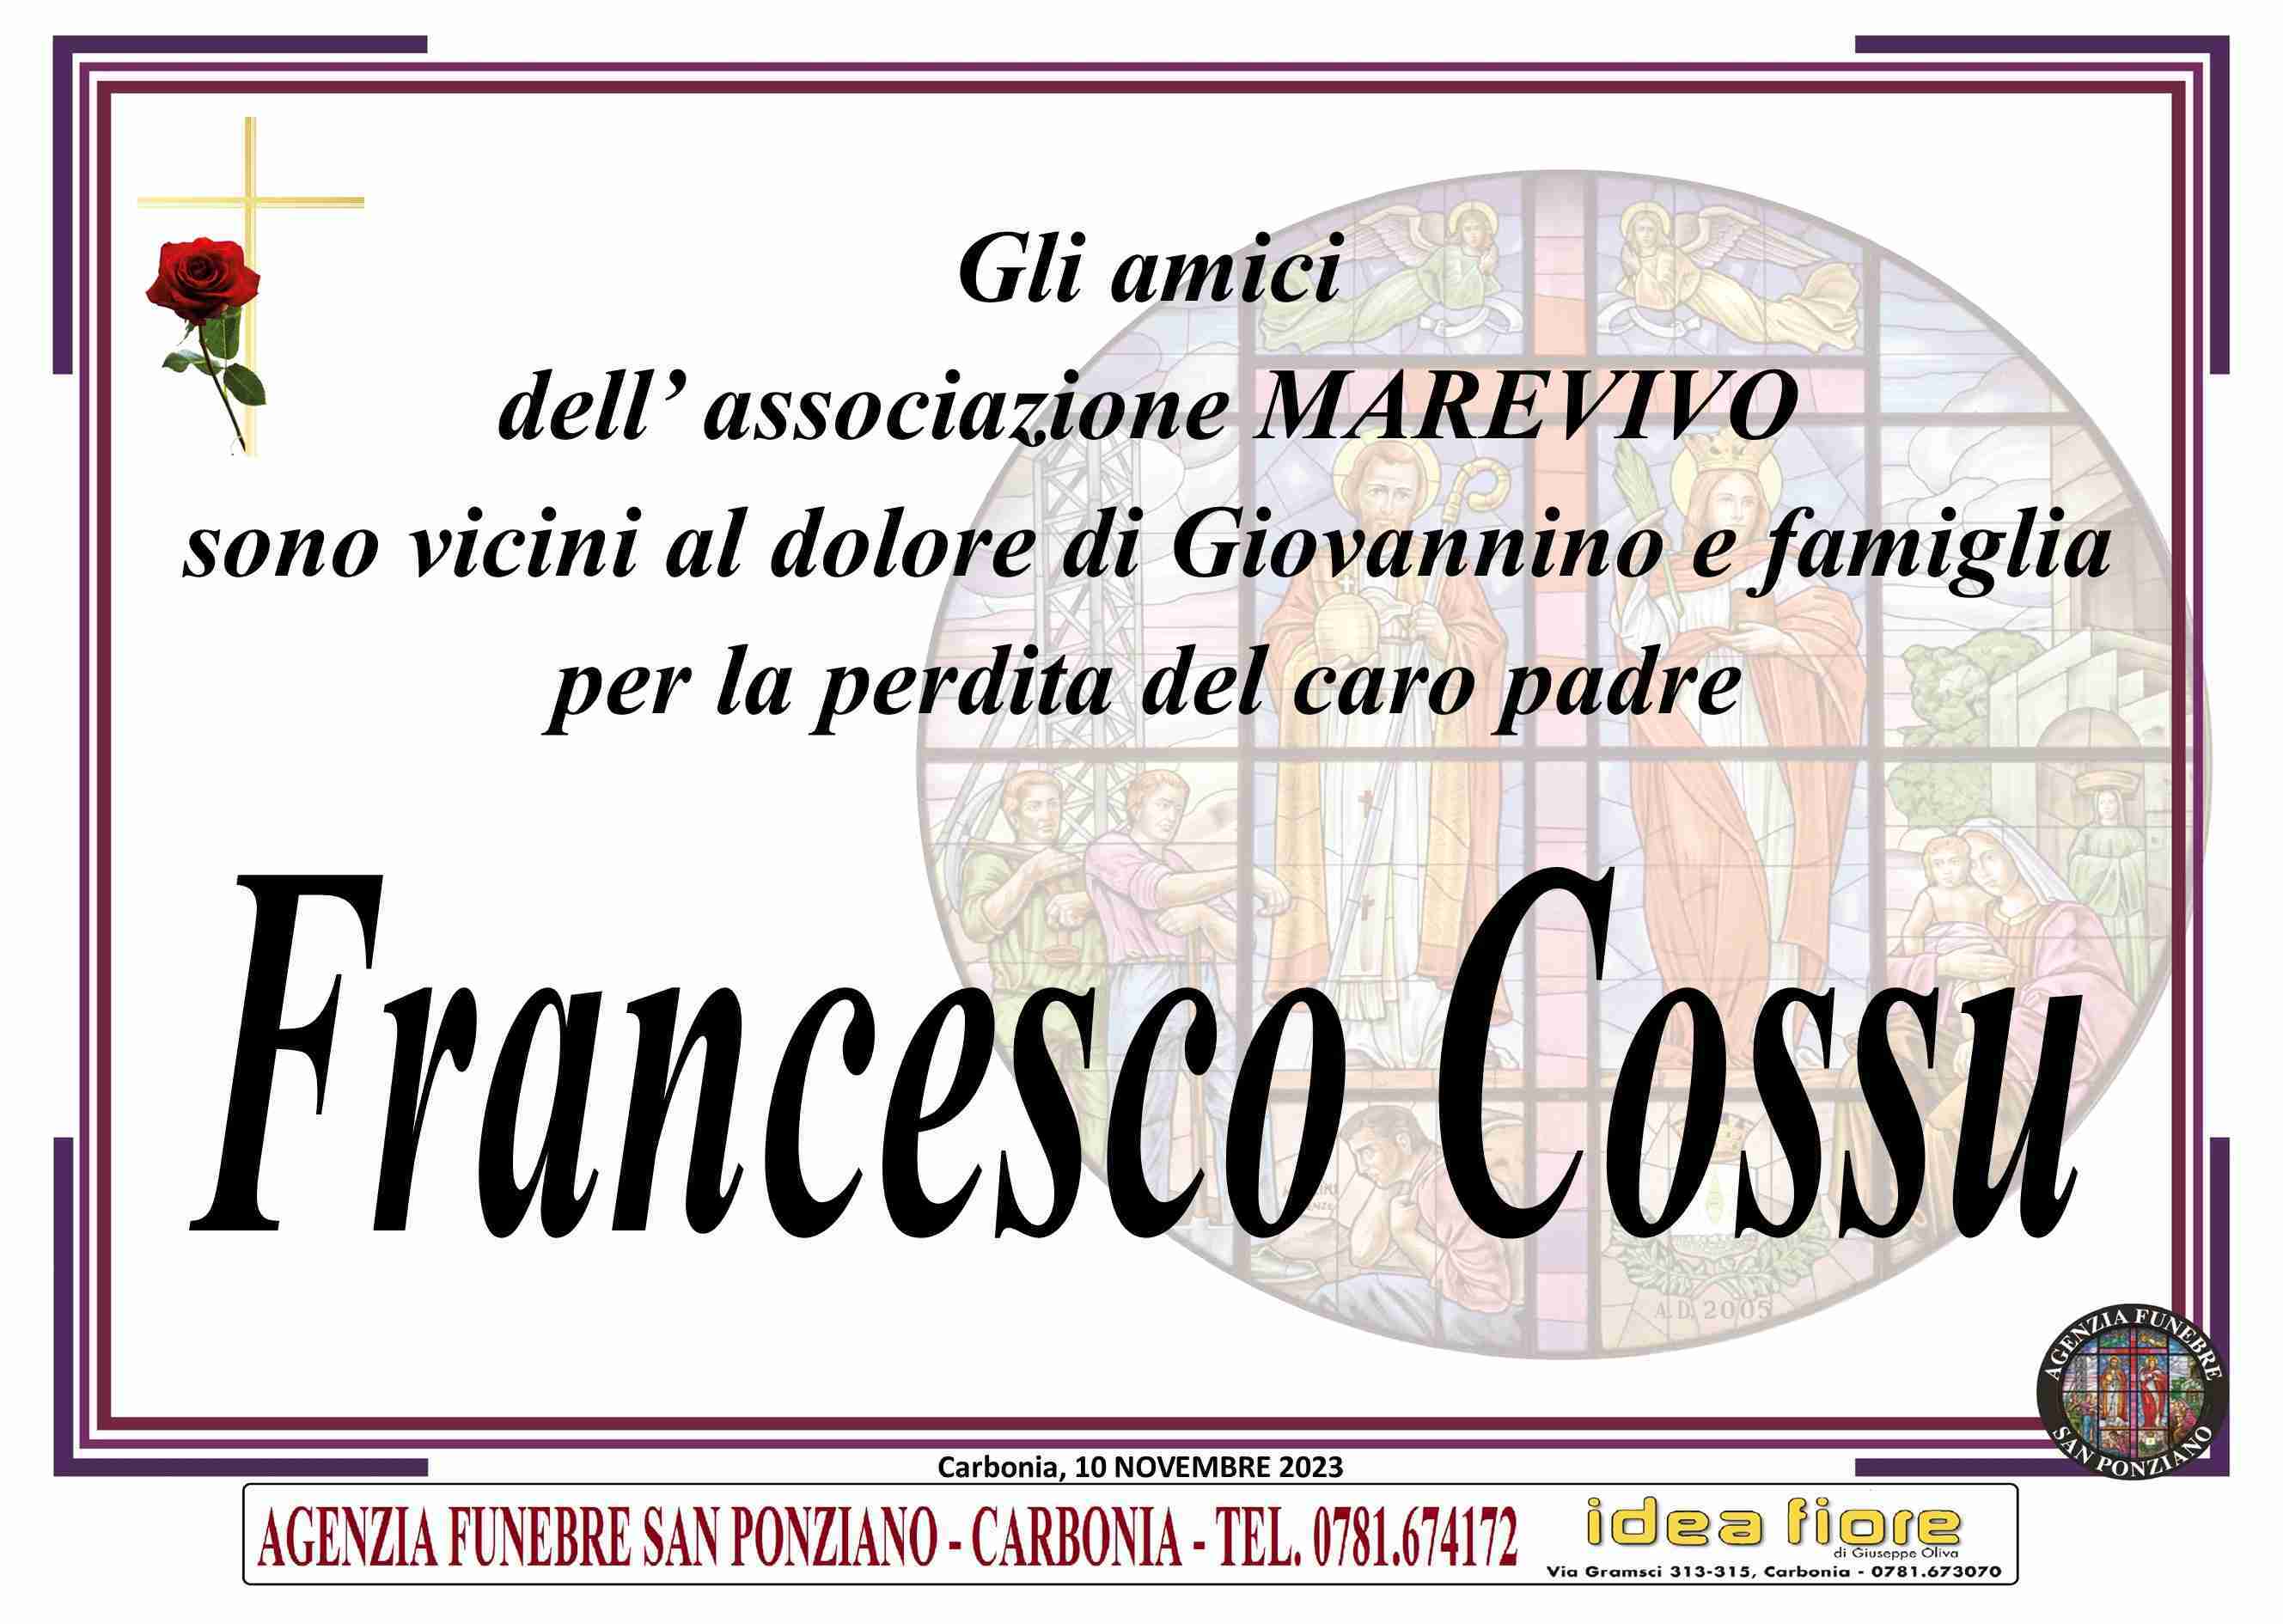 Francesco Cossu